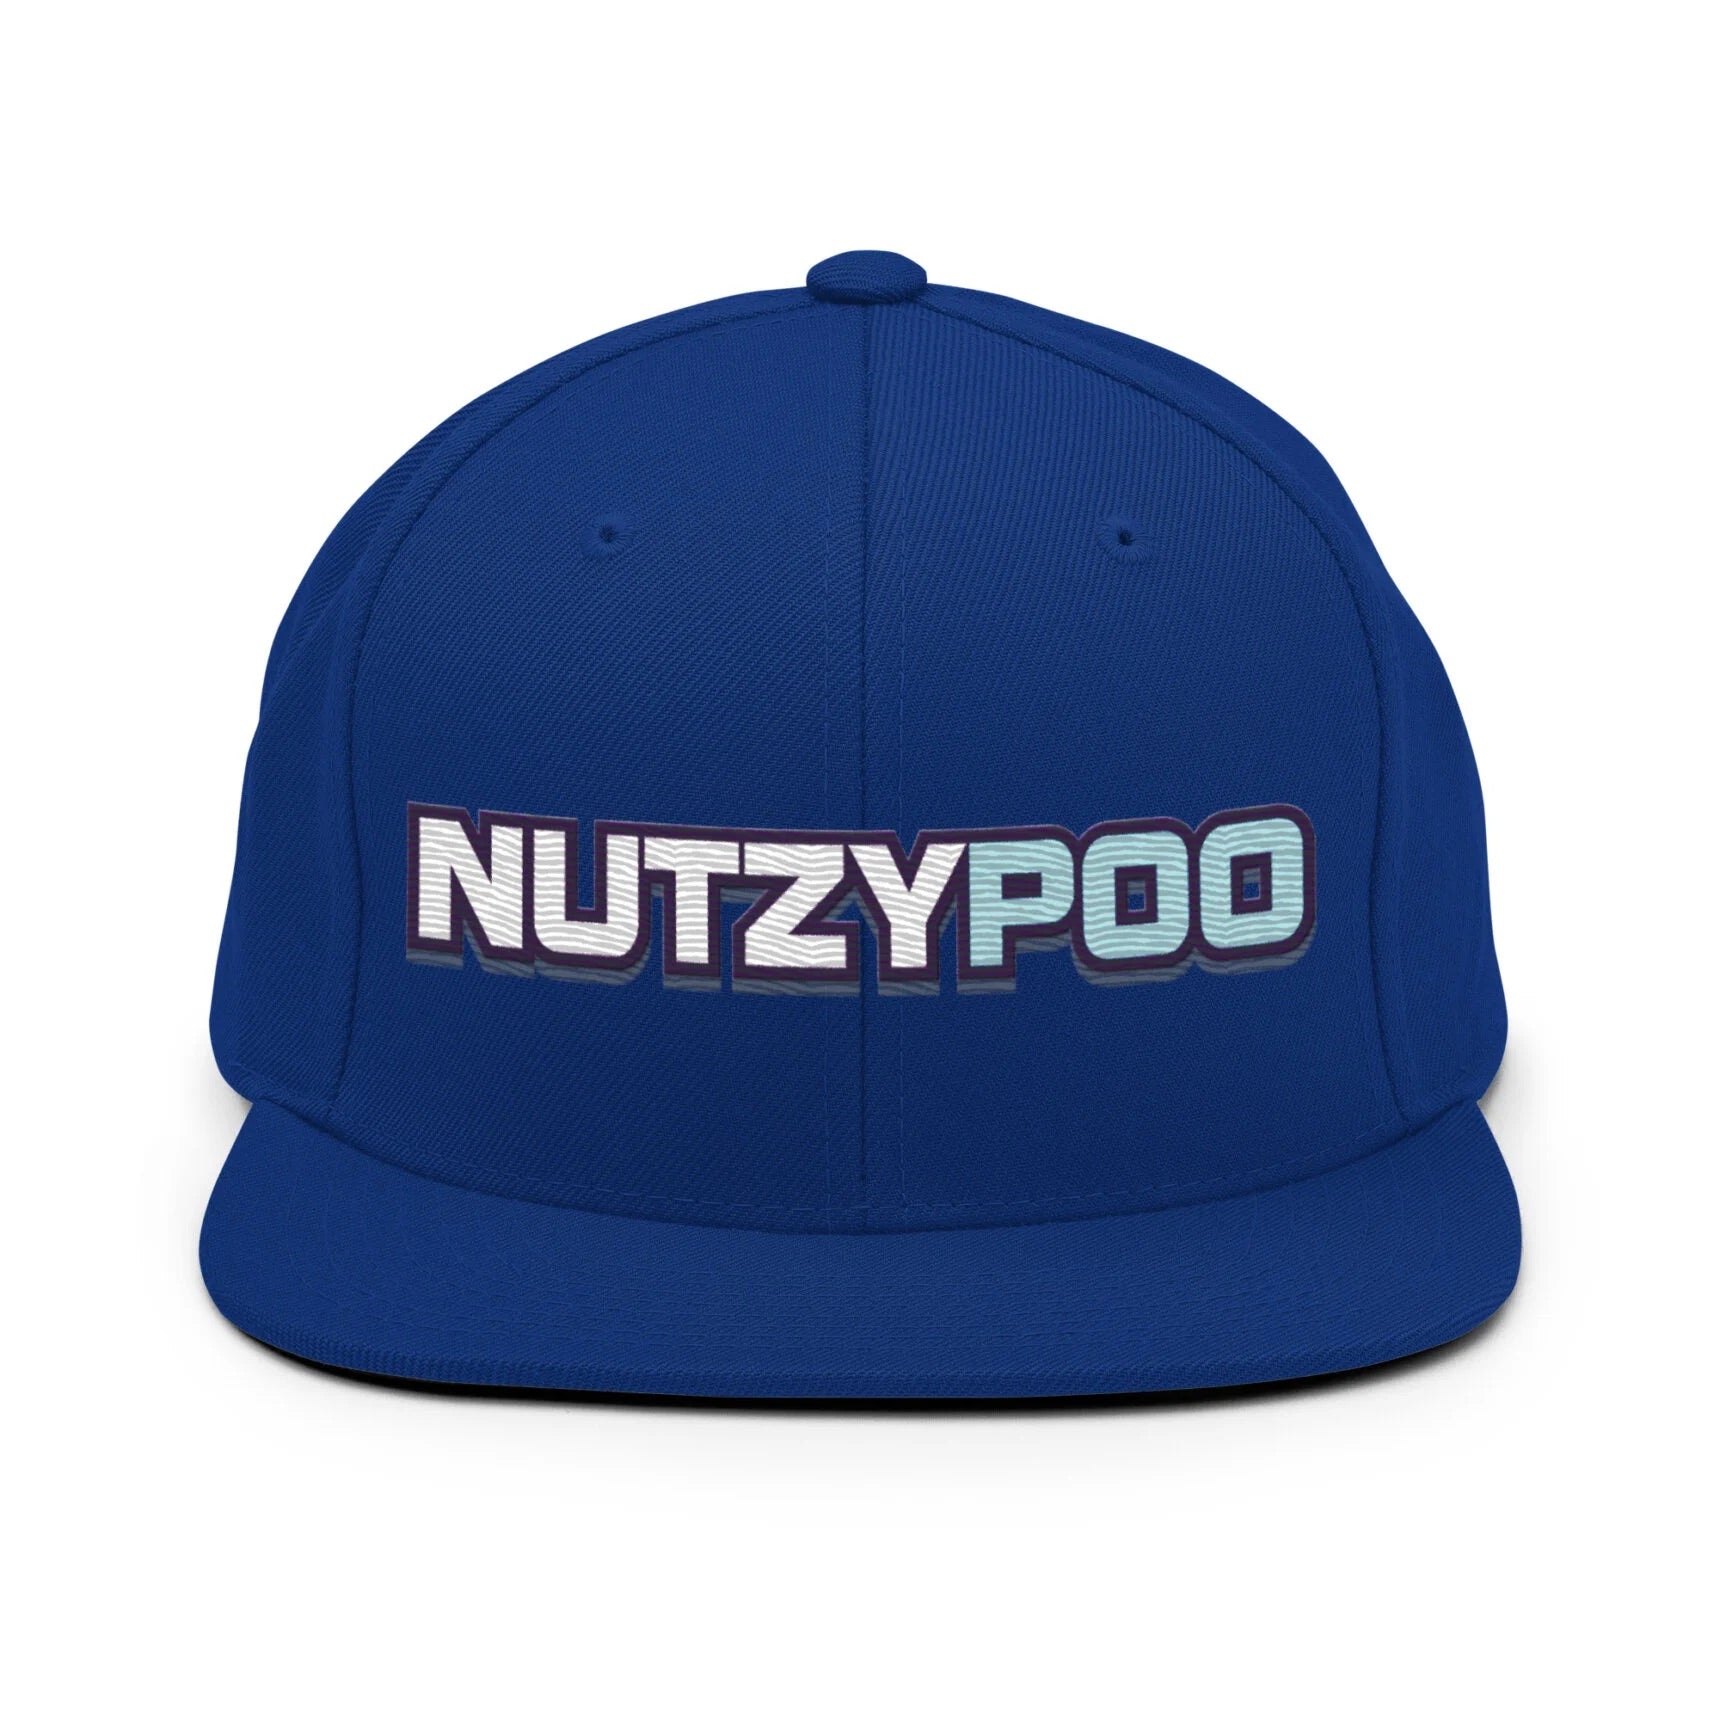 NutzyPoo ShowZone hat in royal blue